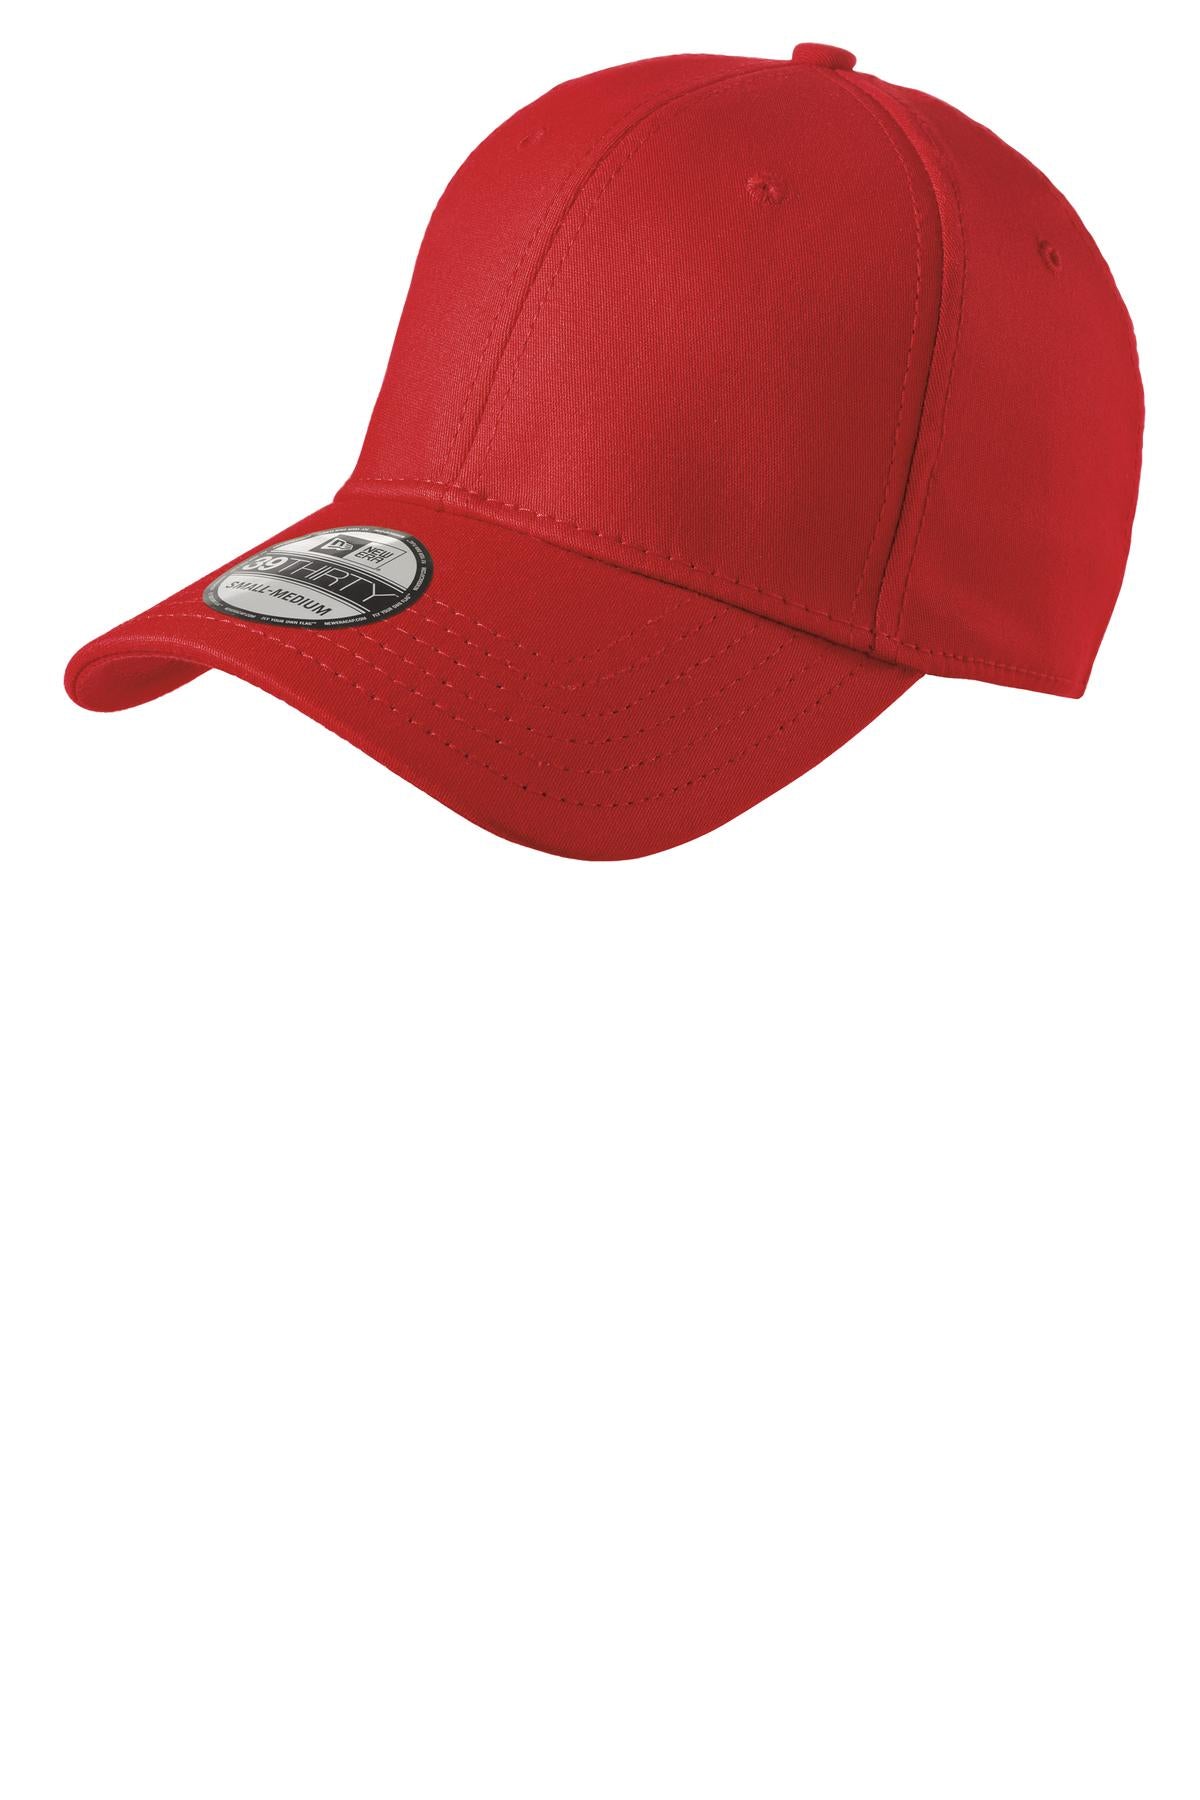 Caps Scarlet Red New Era